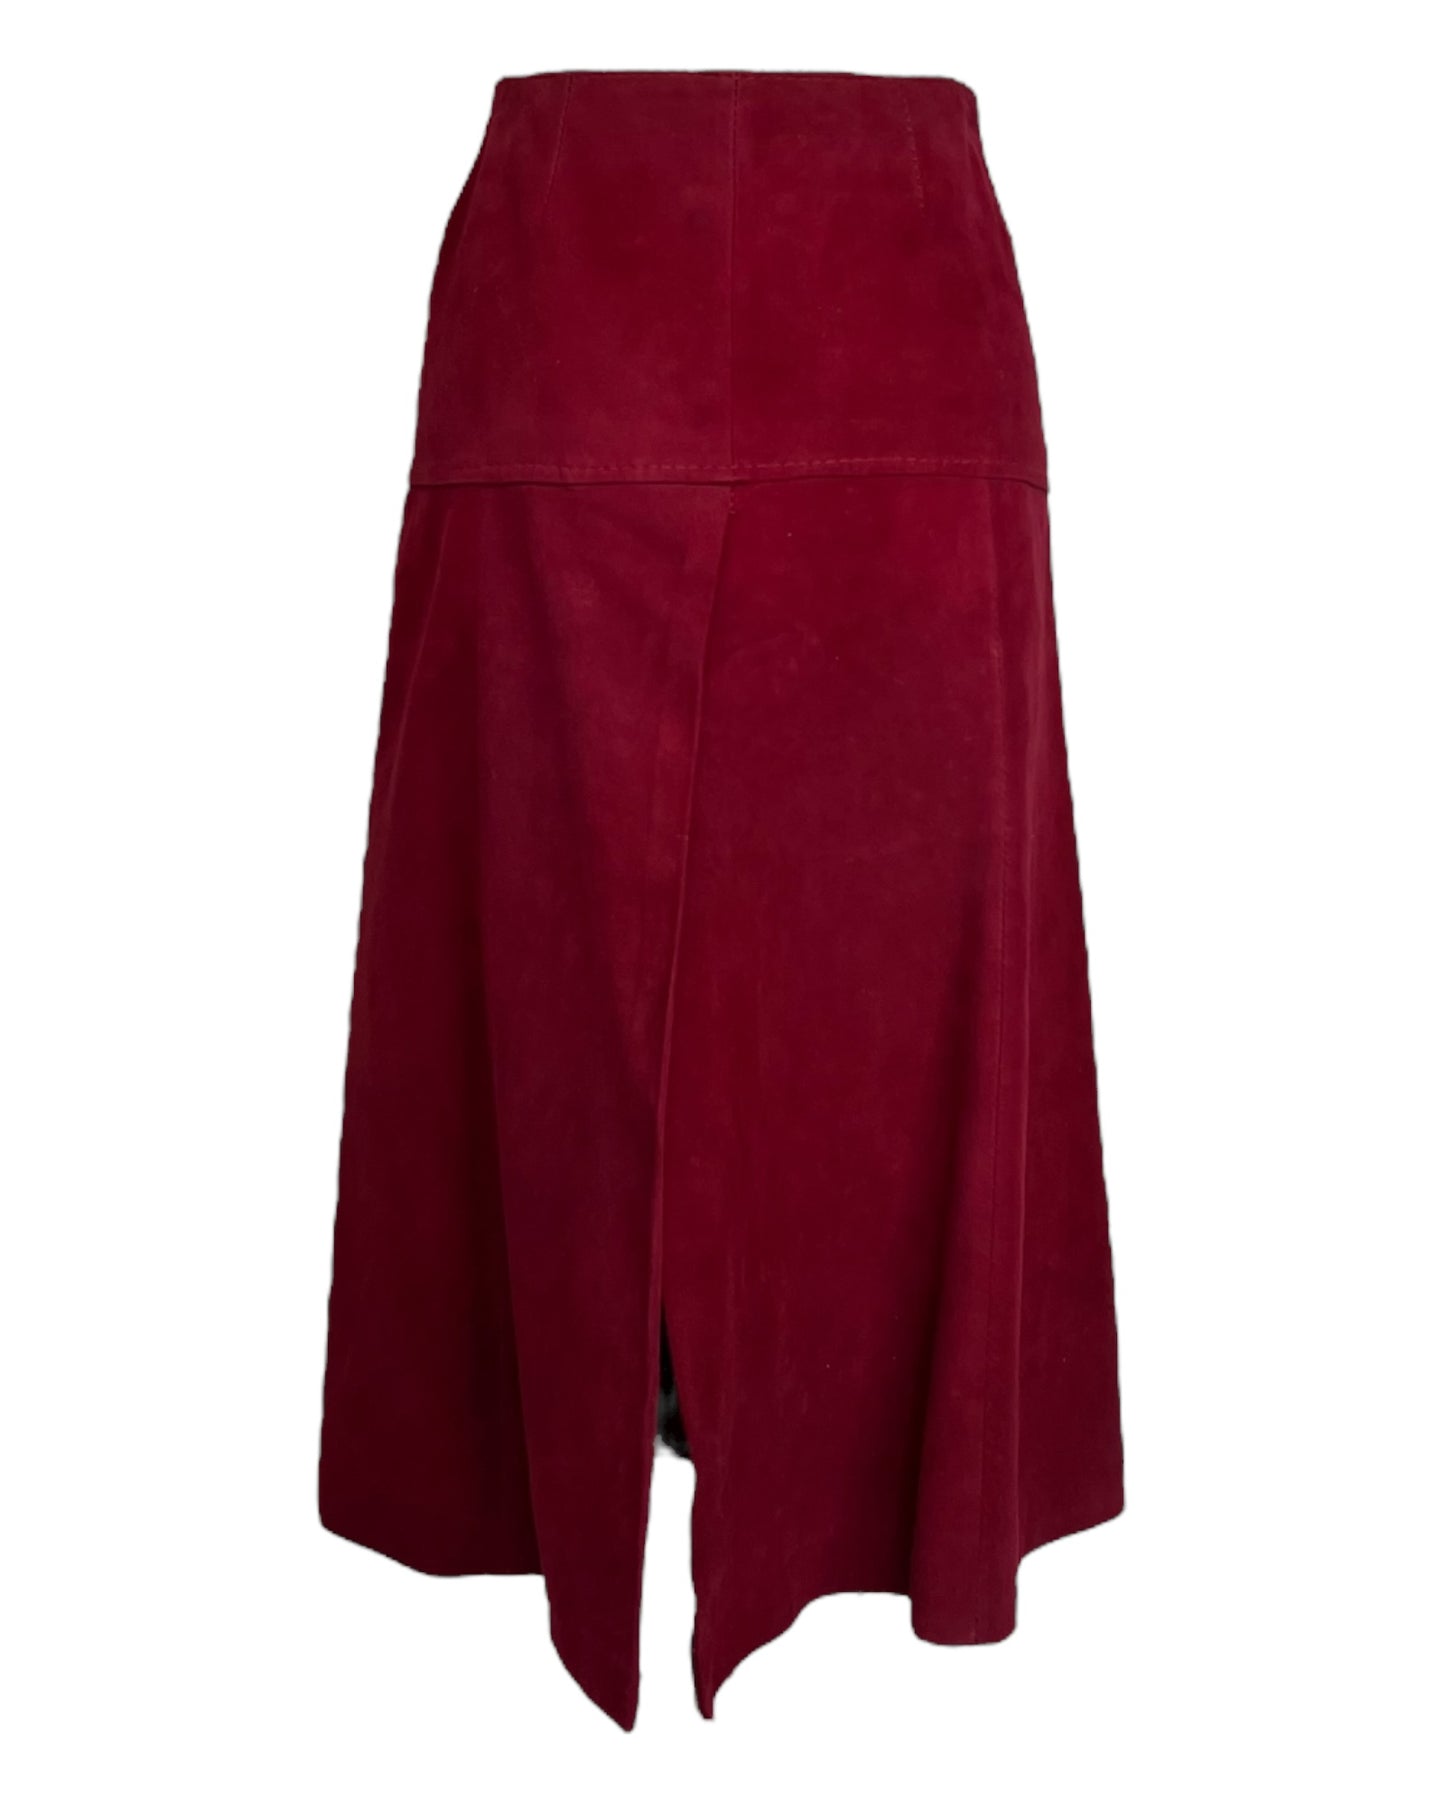 Vintage Suede Crimson Skirt*